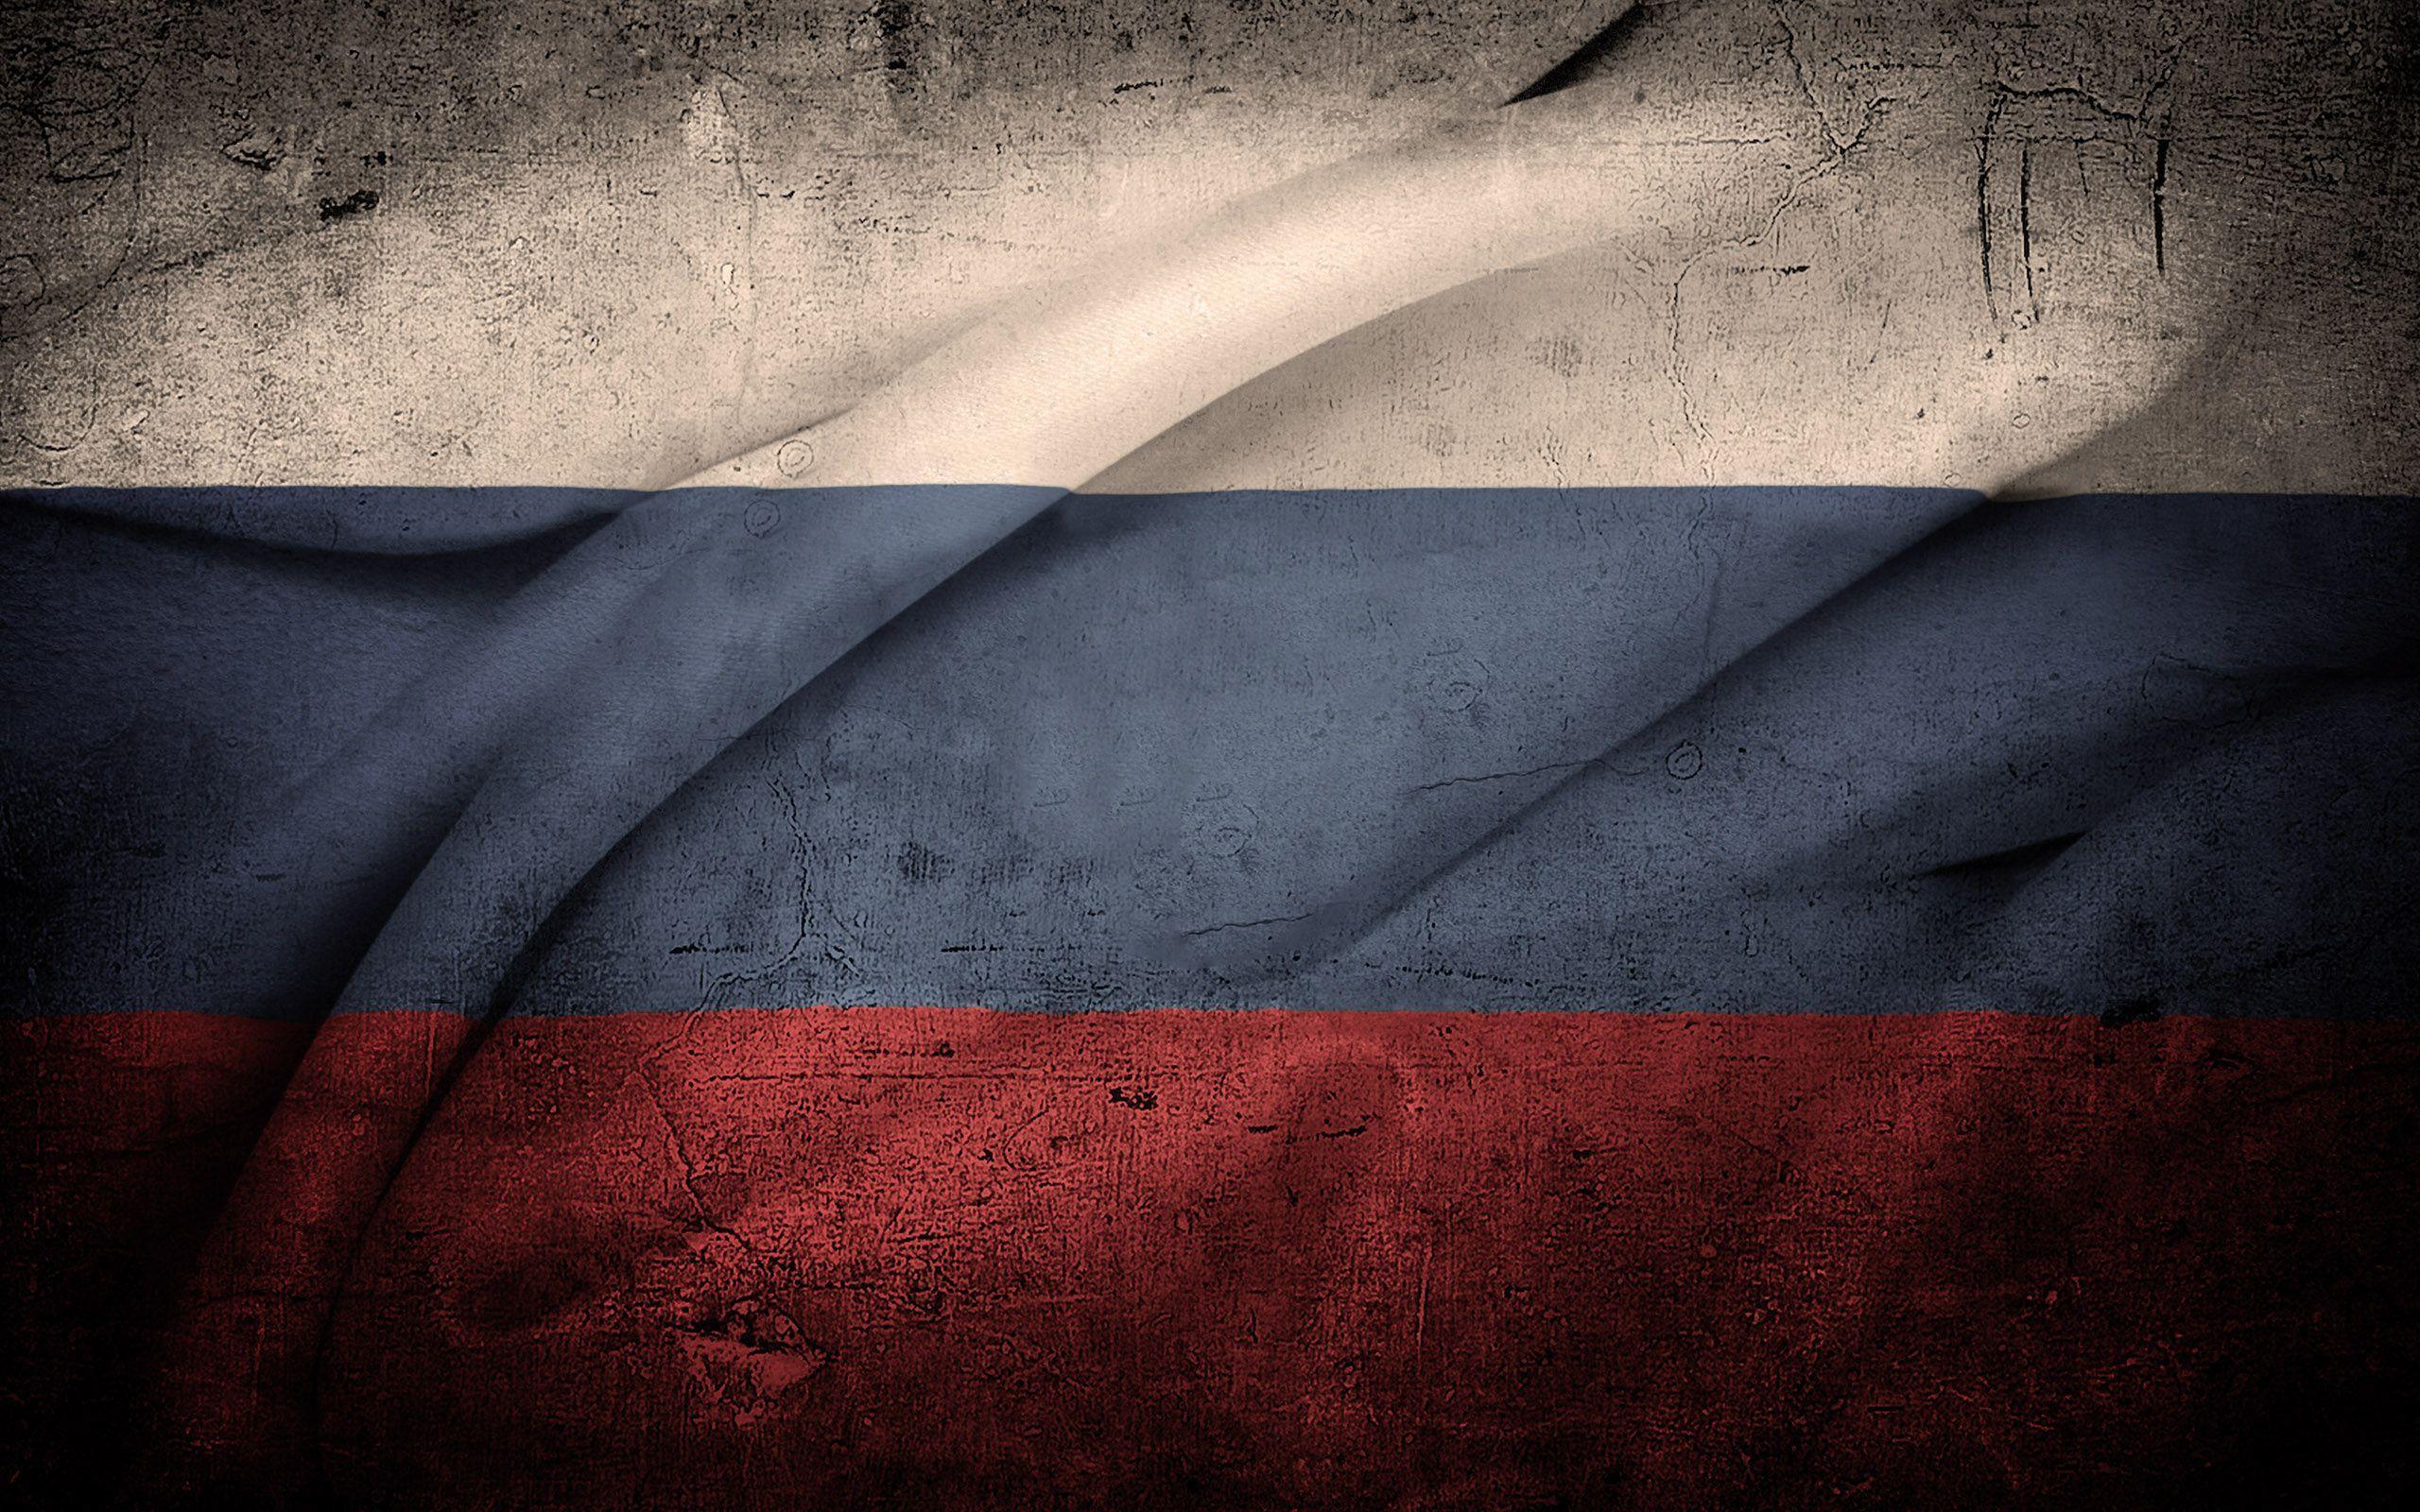 Заставка на телефон российский флаг